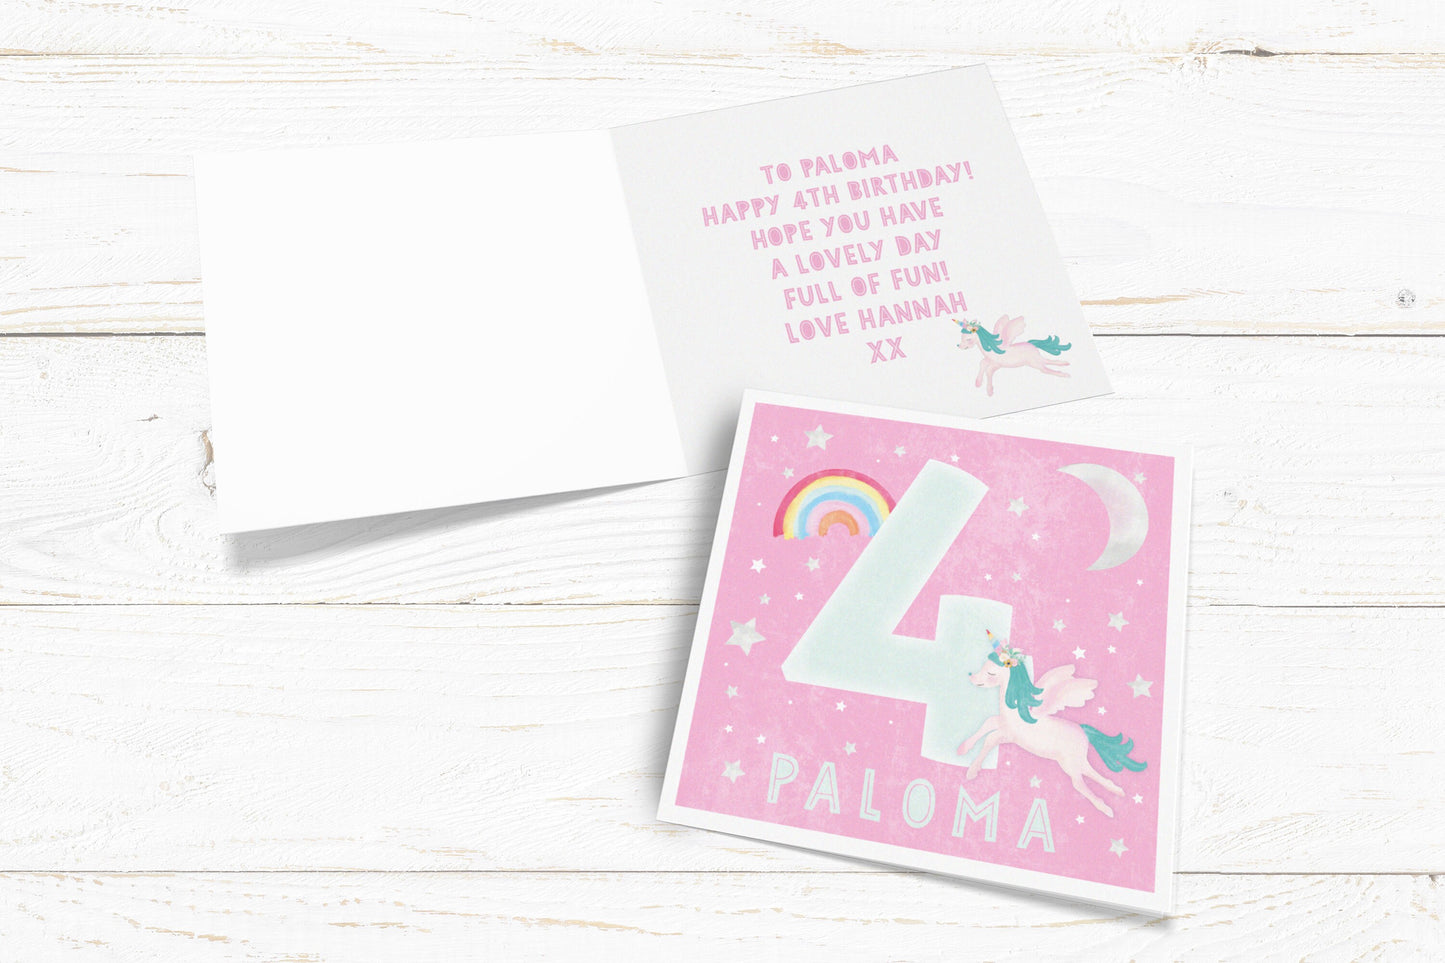 Unicorn Age Card. Personalised Age Card. Cute Big Number Card. Unicorn Rainbow Card. Cute birthday Card, Send Direct Option.